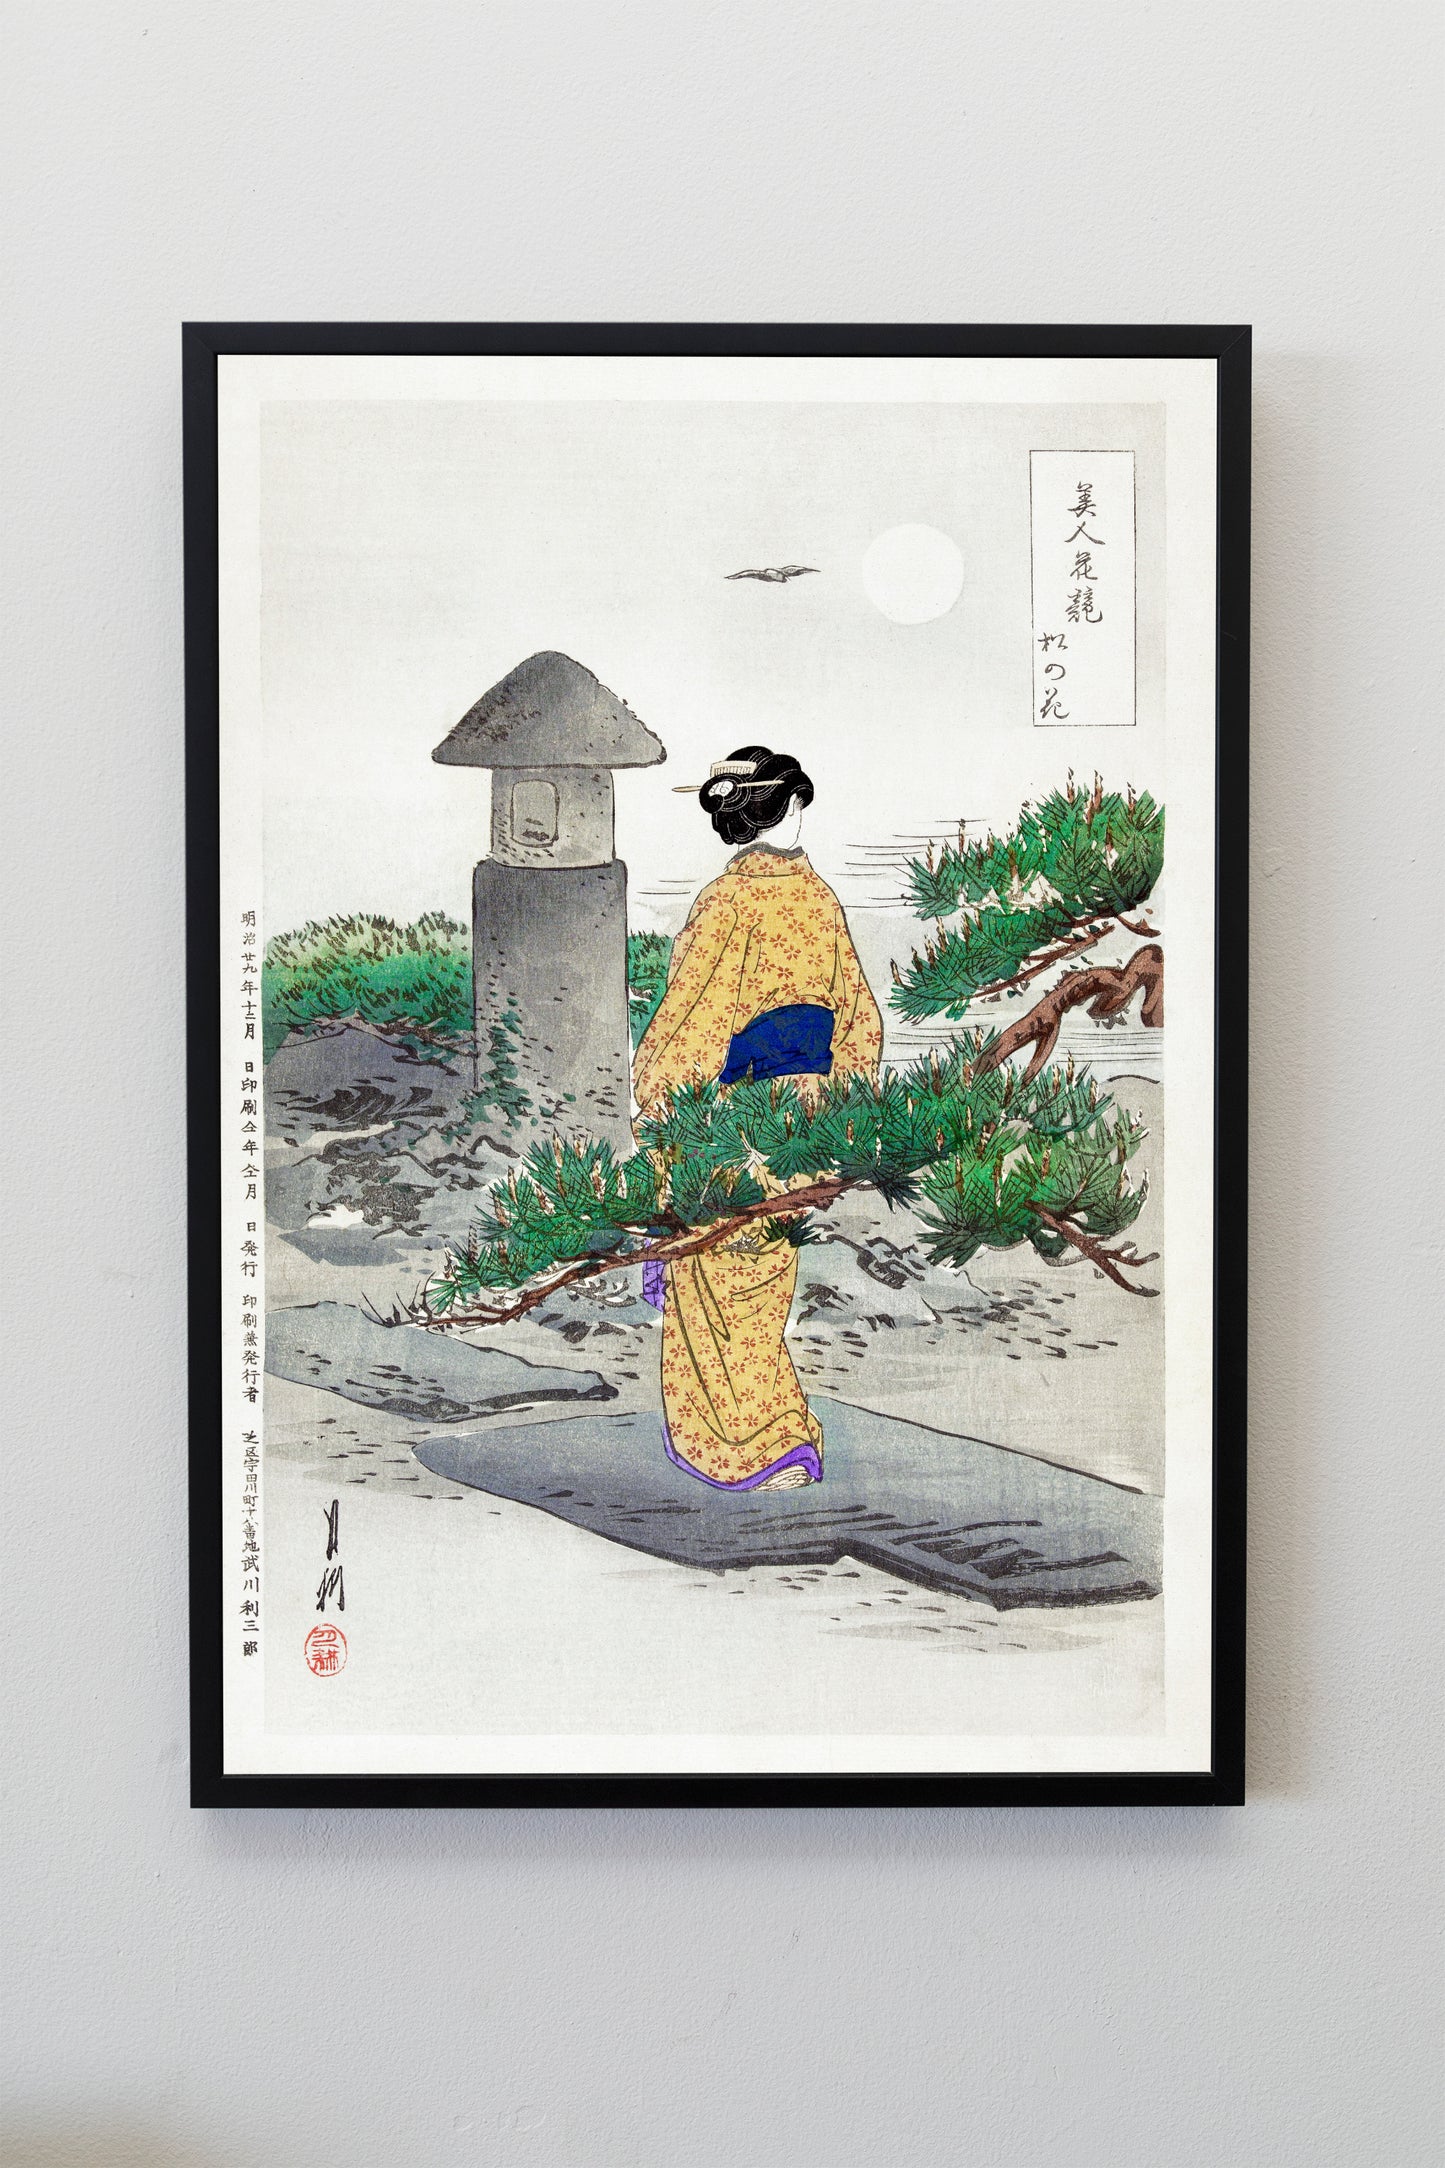 Full Moon and Pine Tree Kimono Japanese Art Poster Illustration Print Wall Hanging Decor